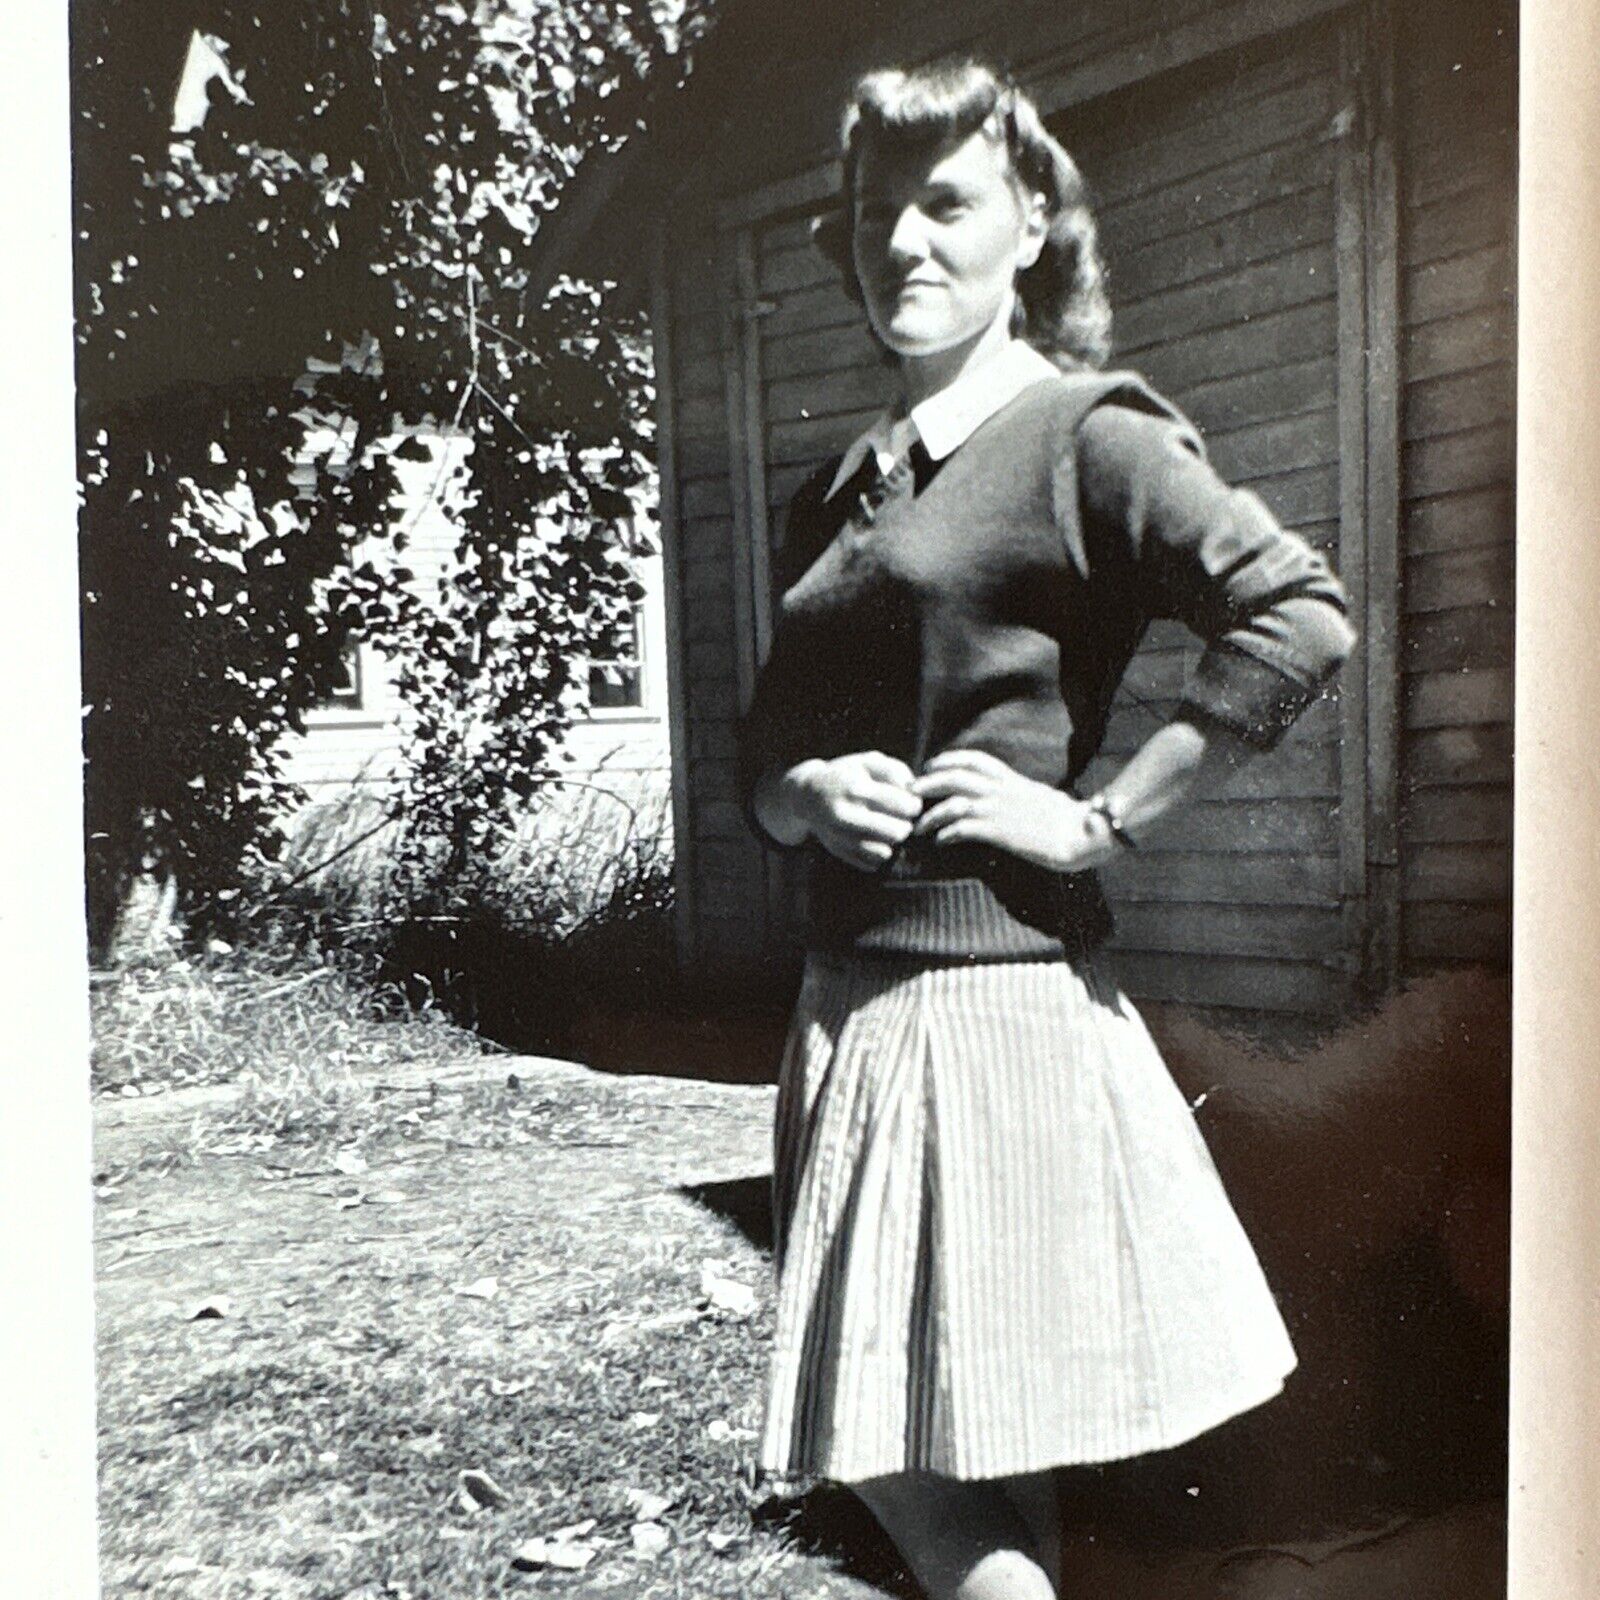 Victory Roll Hair Woman VINTAGE PHOTO Original Snapshot 1940s Girl next door